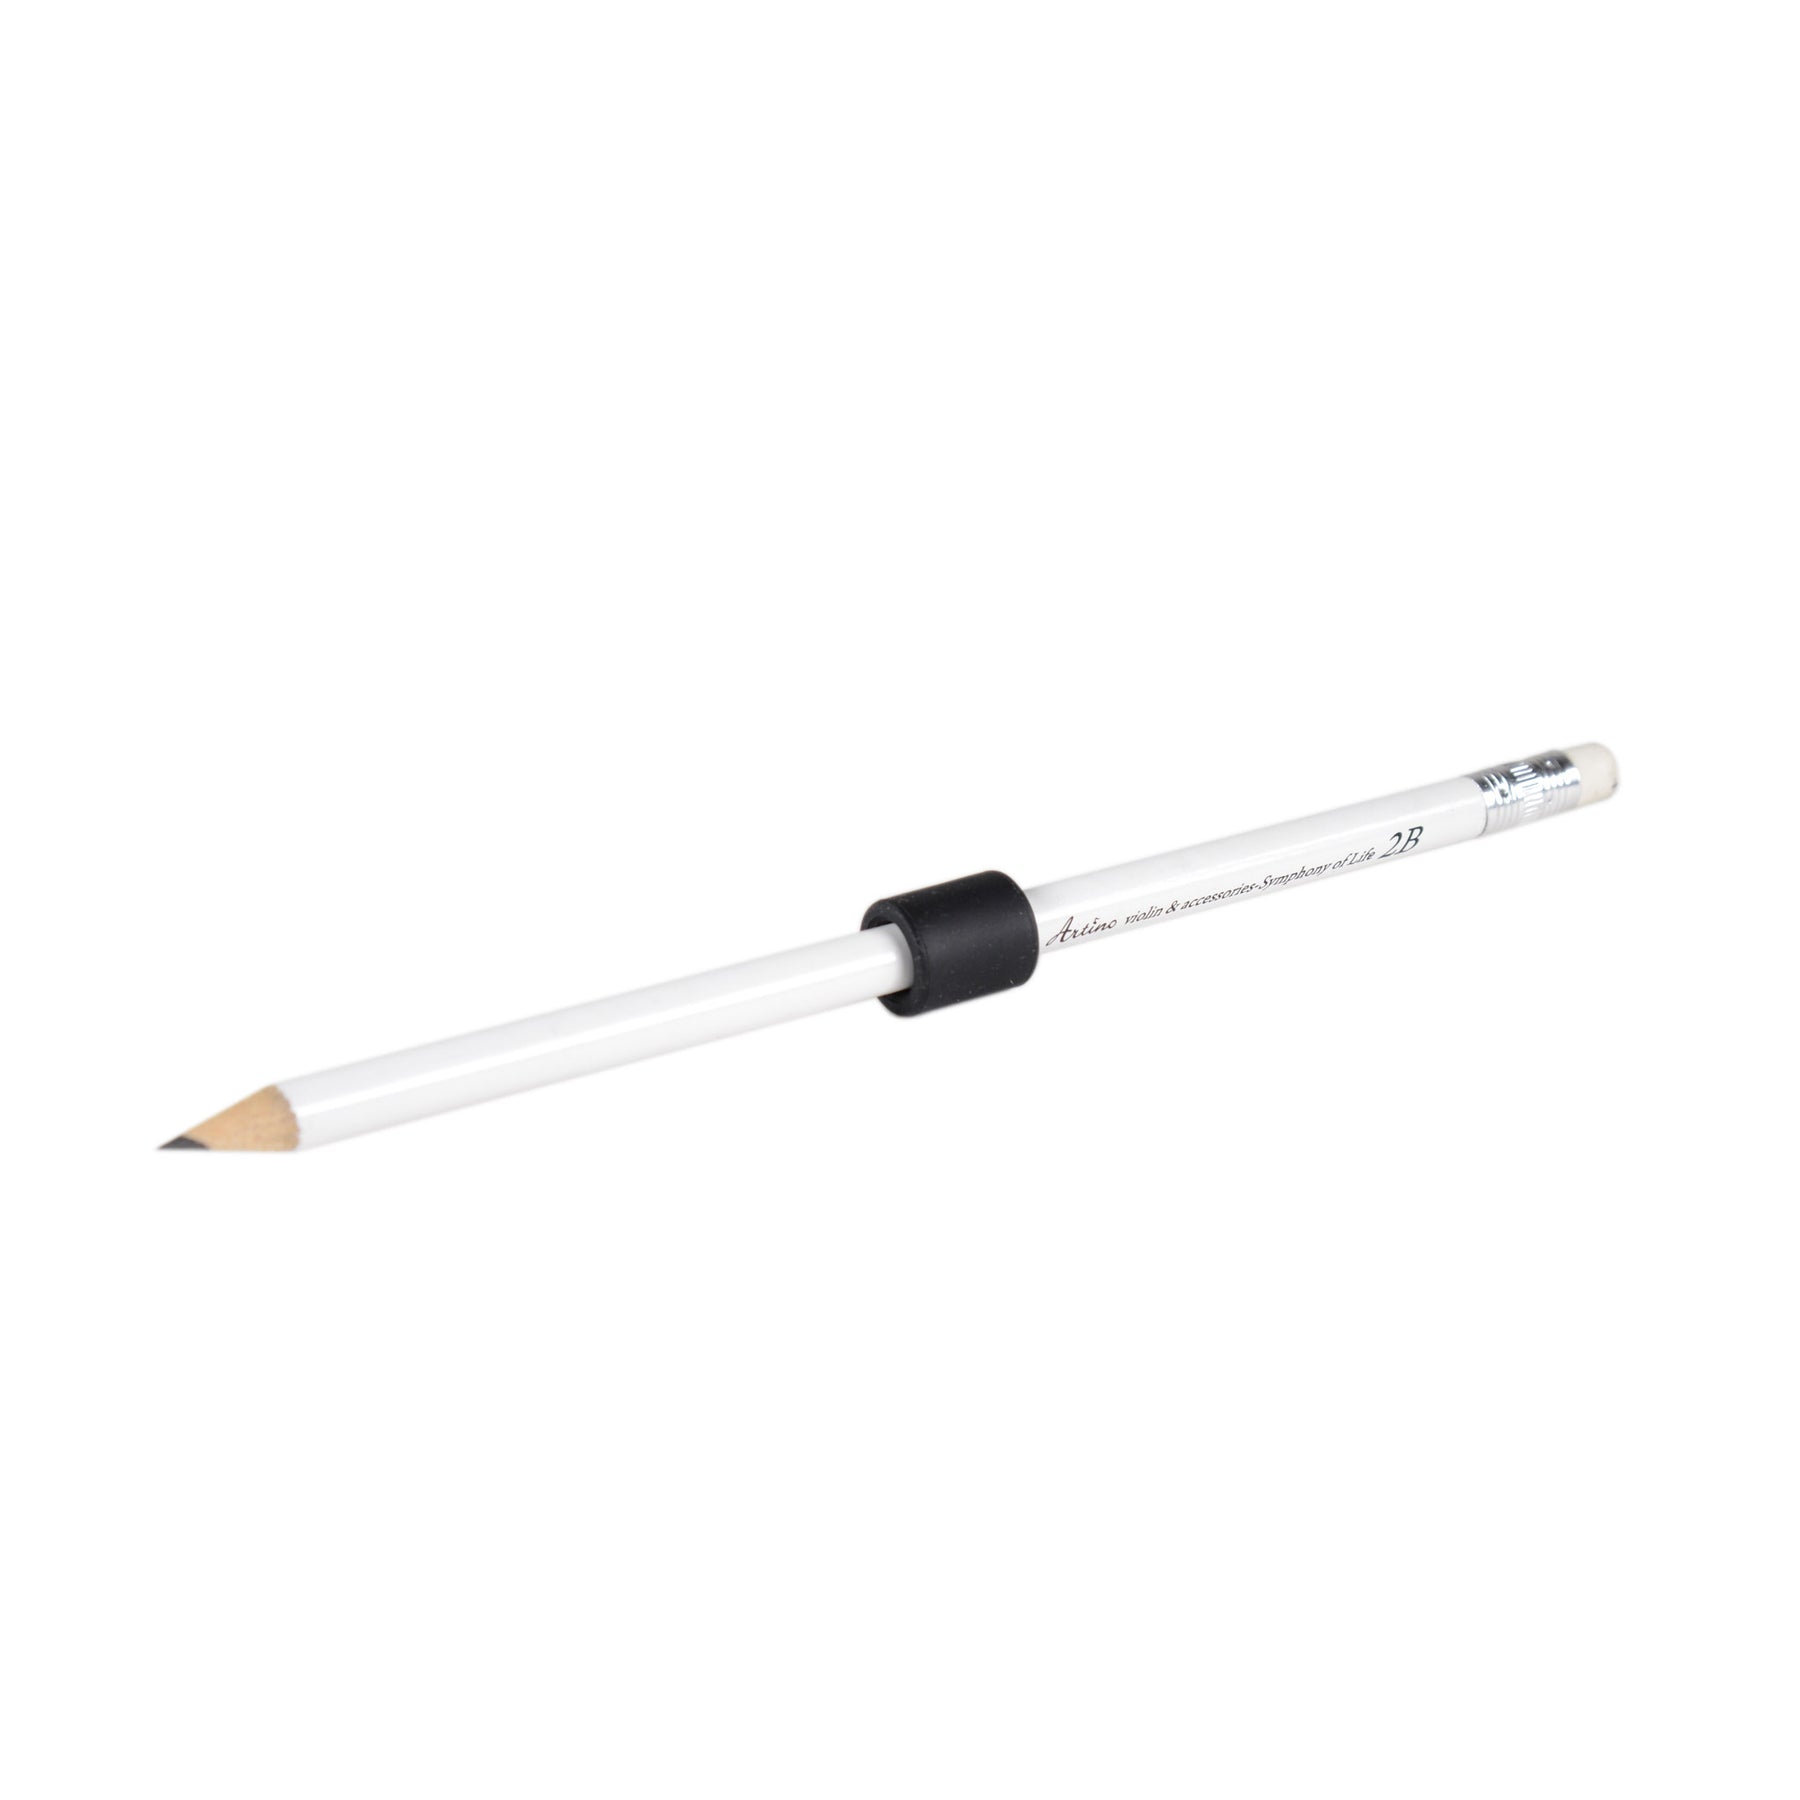 Artino Pencil Magnet with 2 Pencils